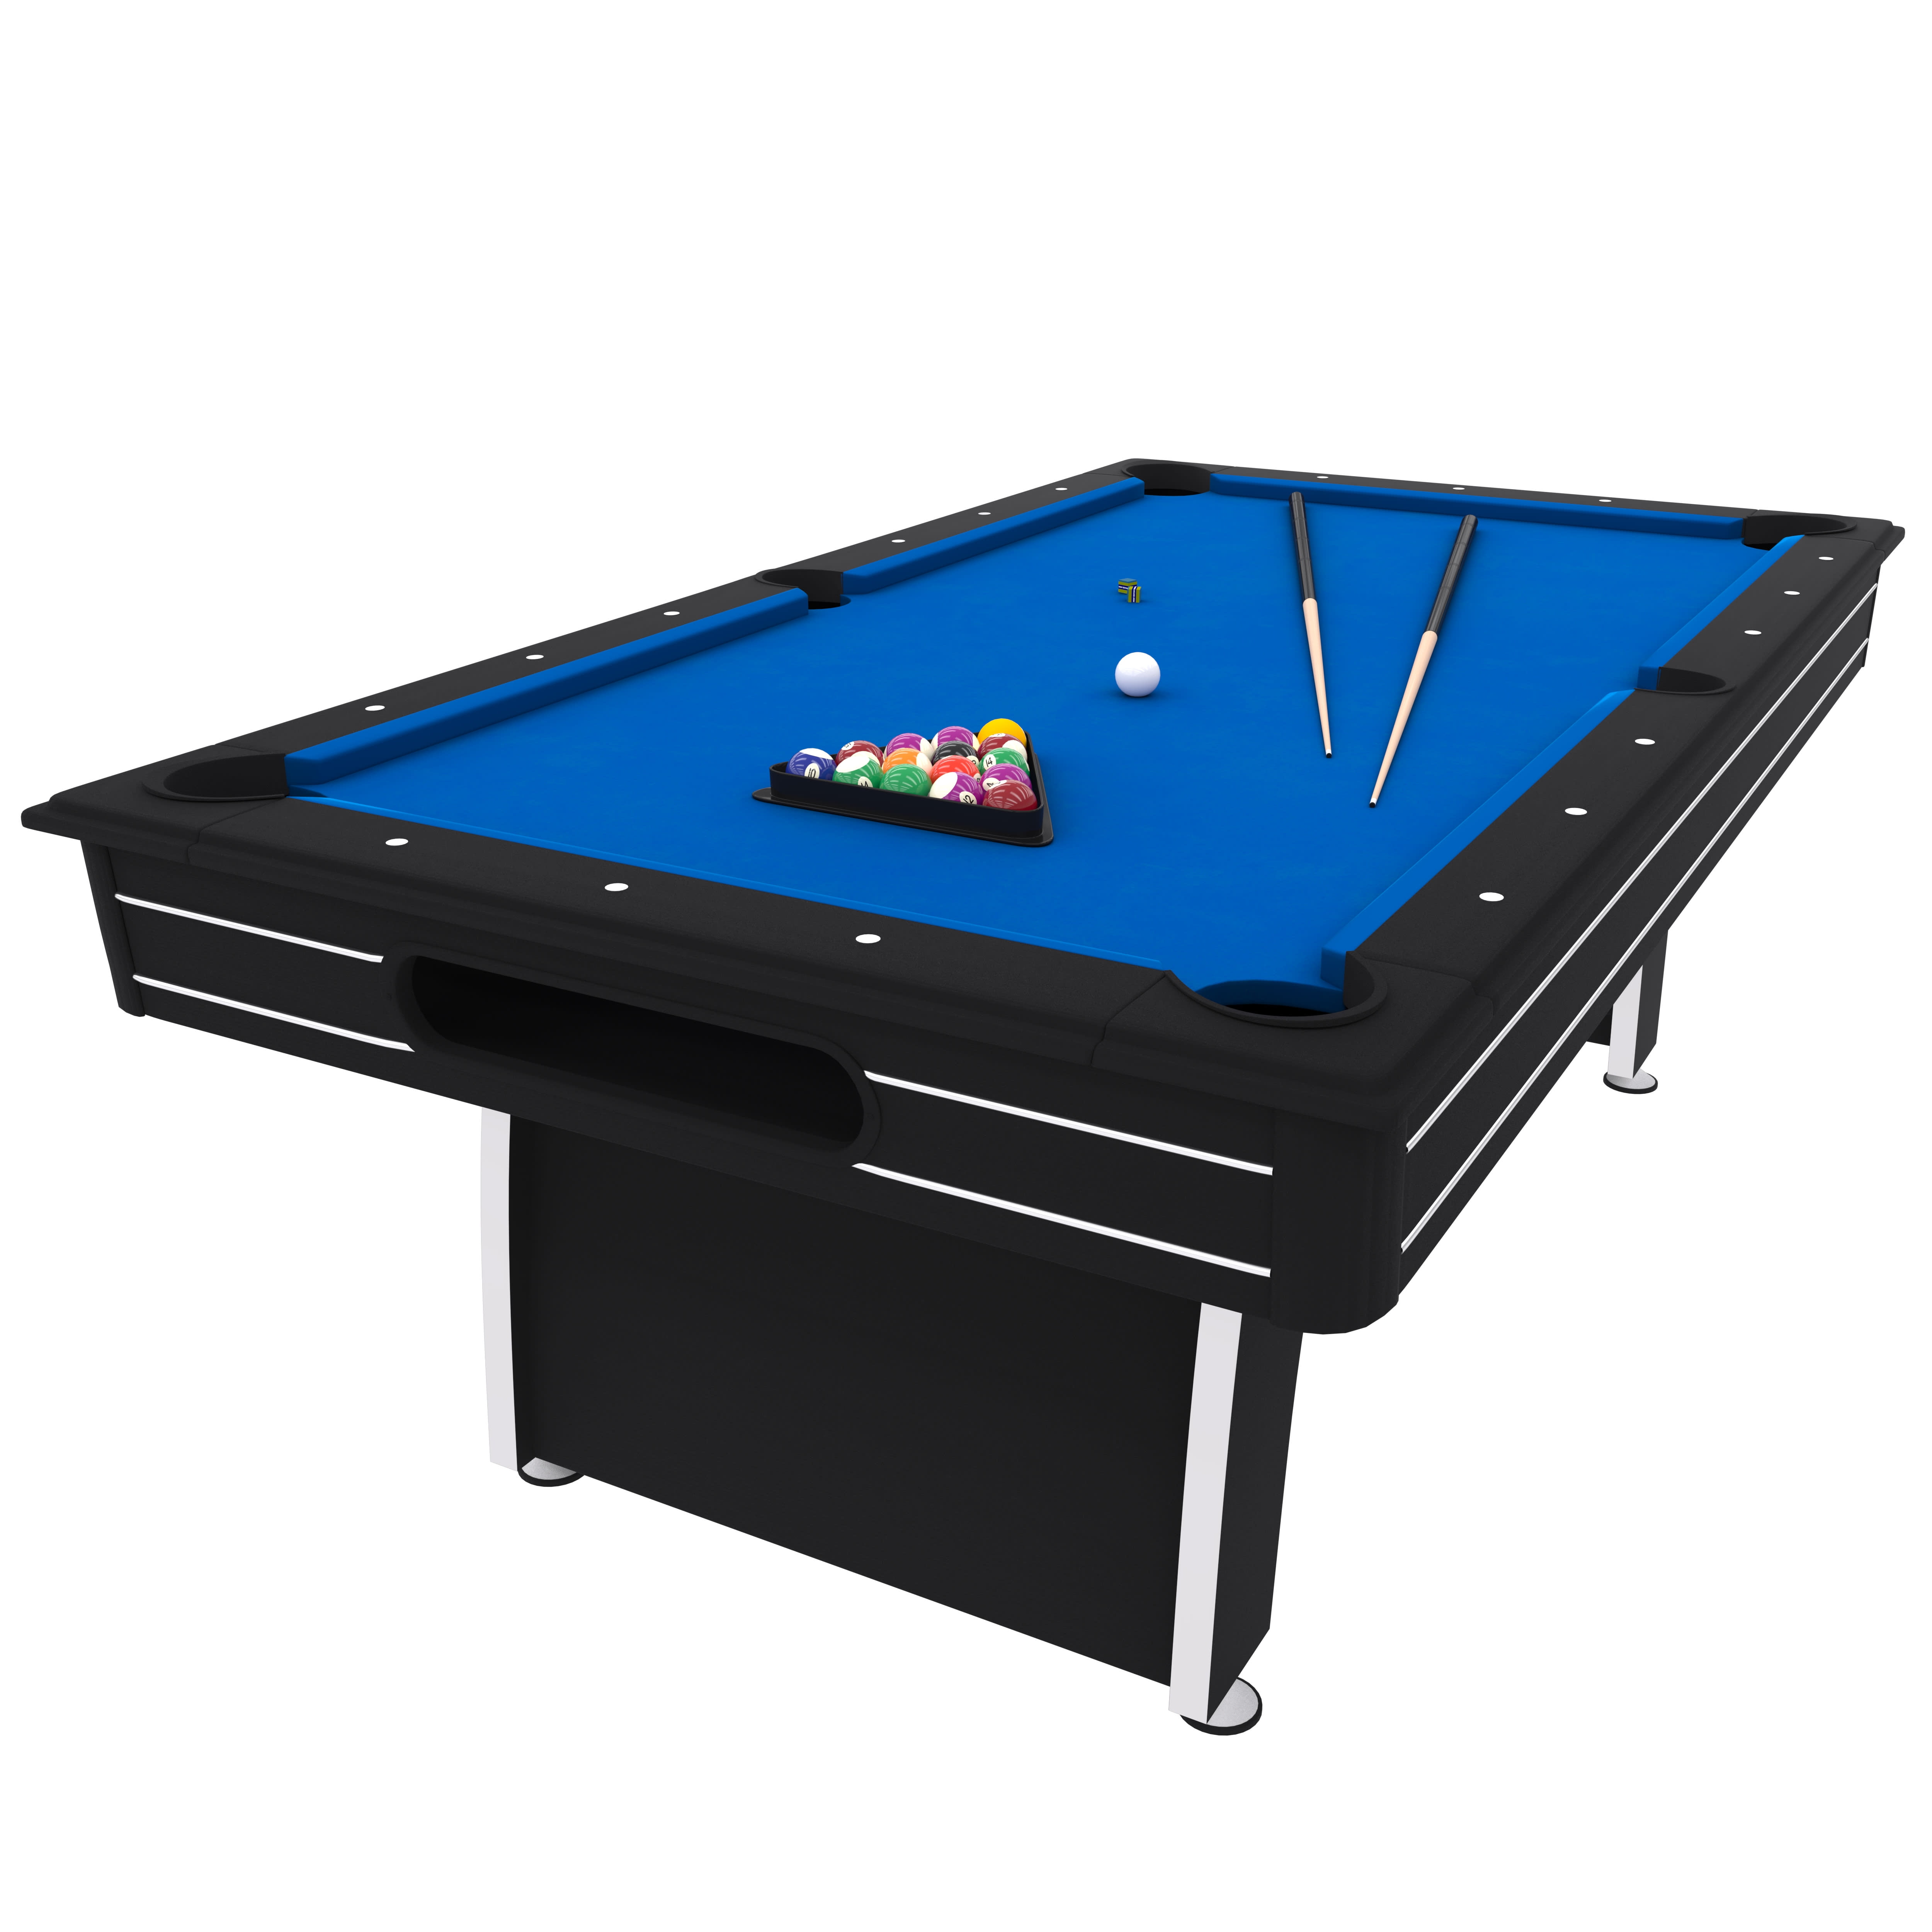 Championship PRO 7 inches deep Pool Table Black Webliner Pockets Set/ 6 